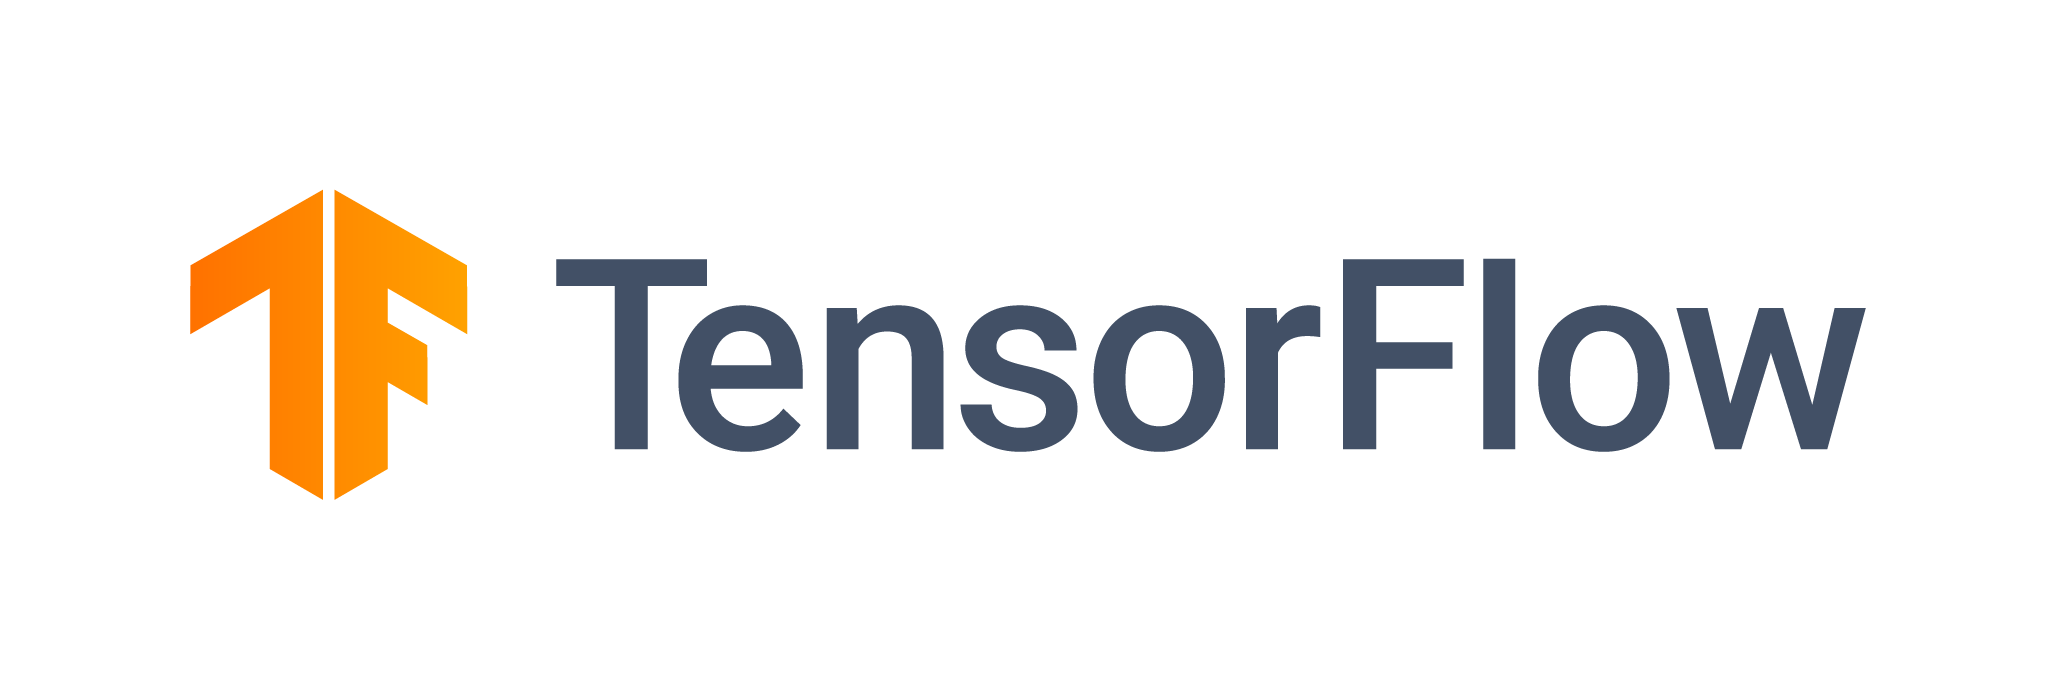 Tensorflow Symbol